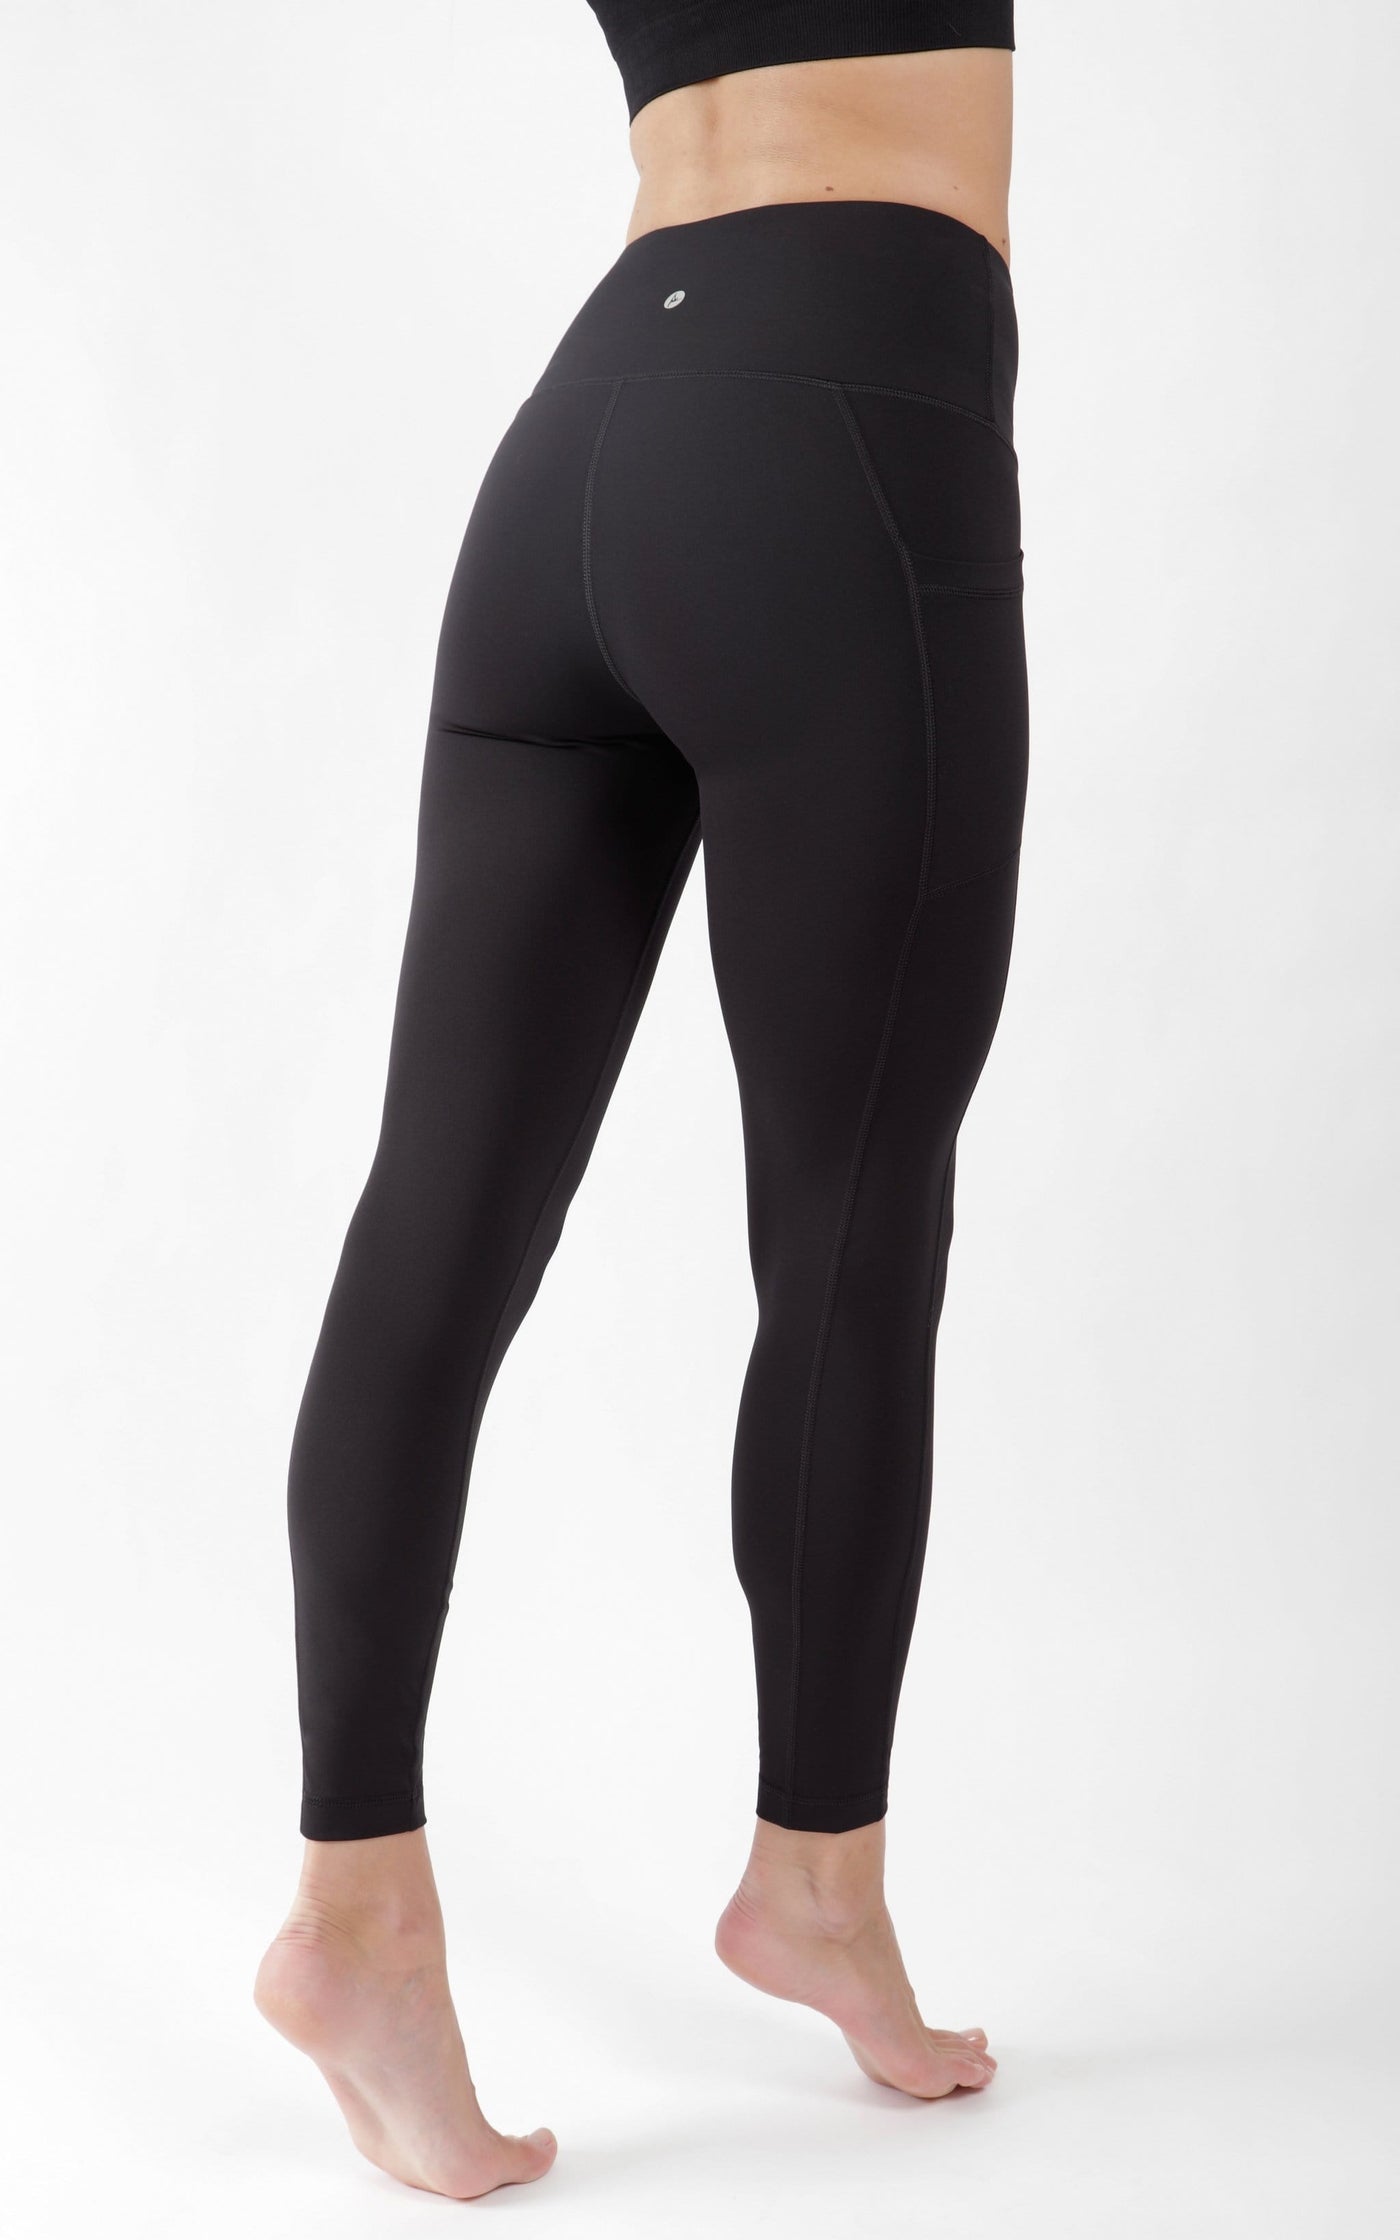 Squat Proof Leggings High Waist | Squat Proof Leggings Women - Seamless  Yoga Pants - Aliexpress